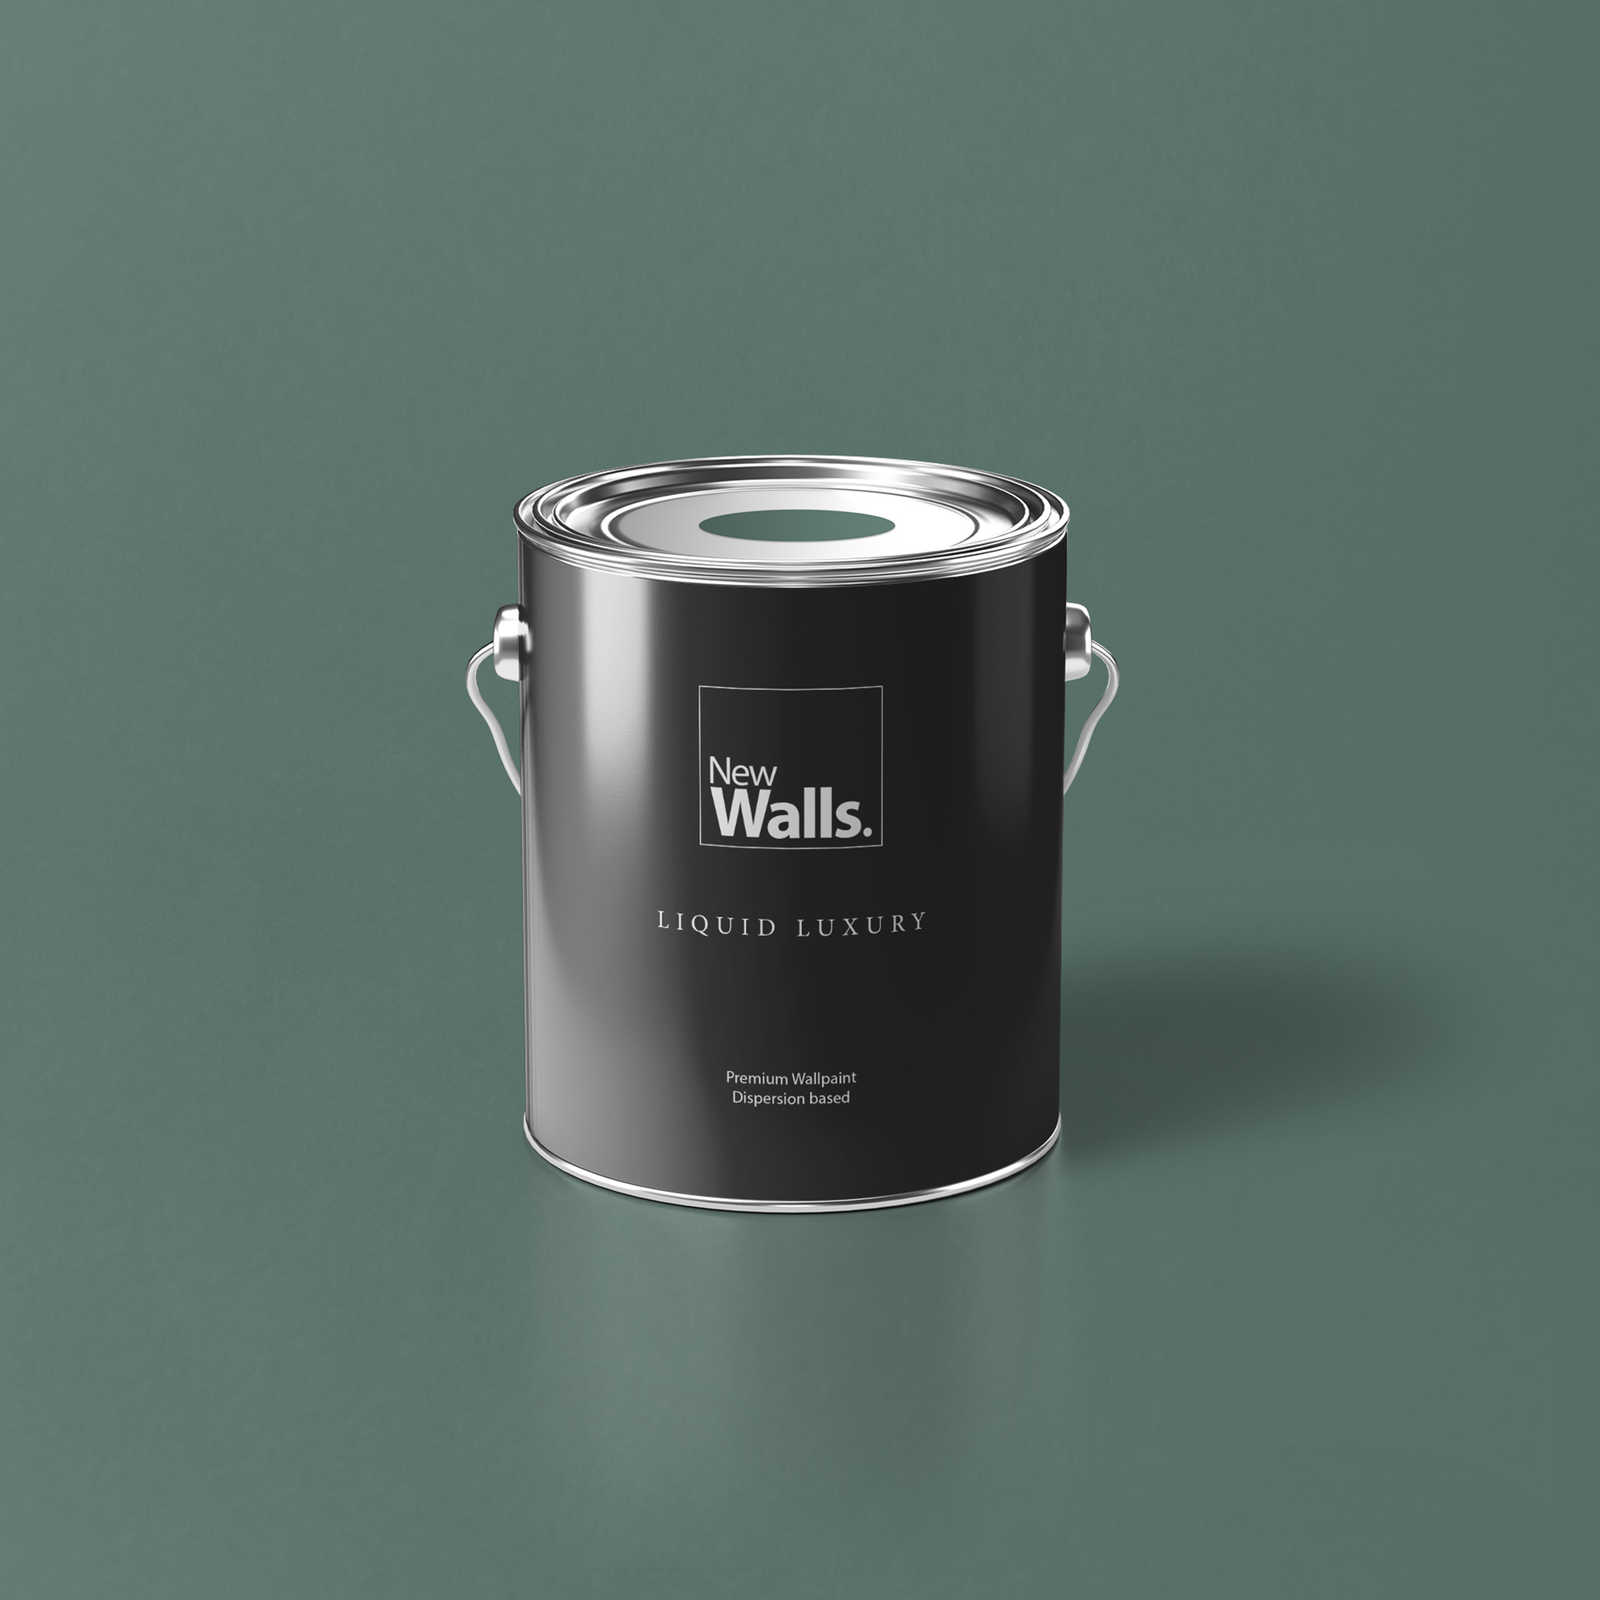 Premium Wall Paint Calm Eucalyptus »Expressive Emerald« NW410 – 2.5 litre
